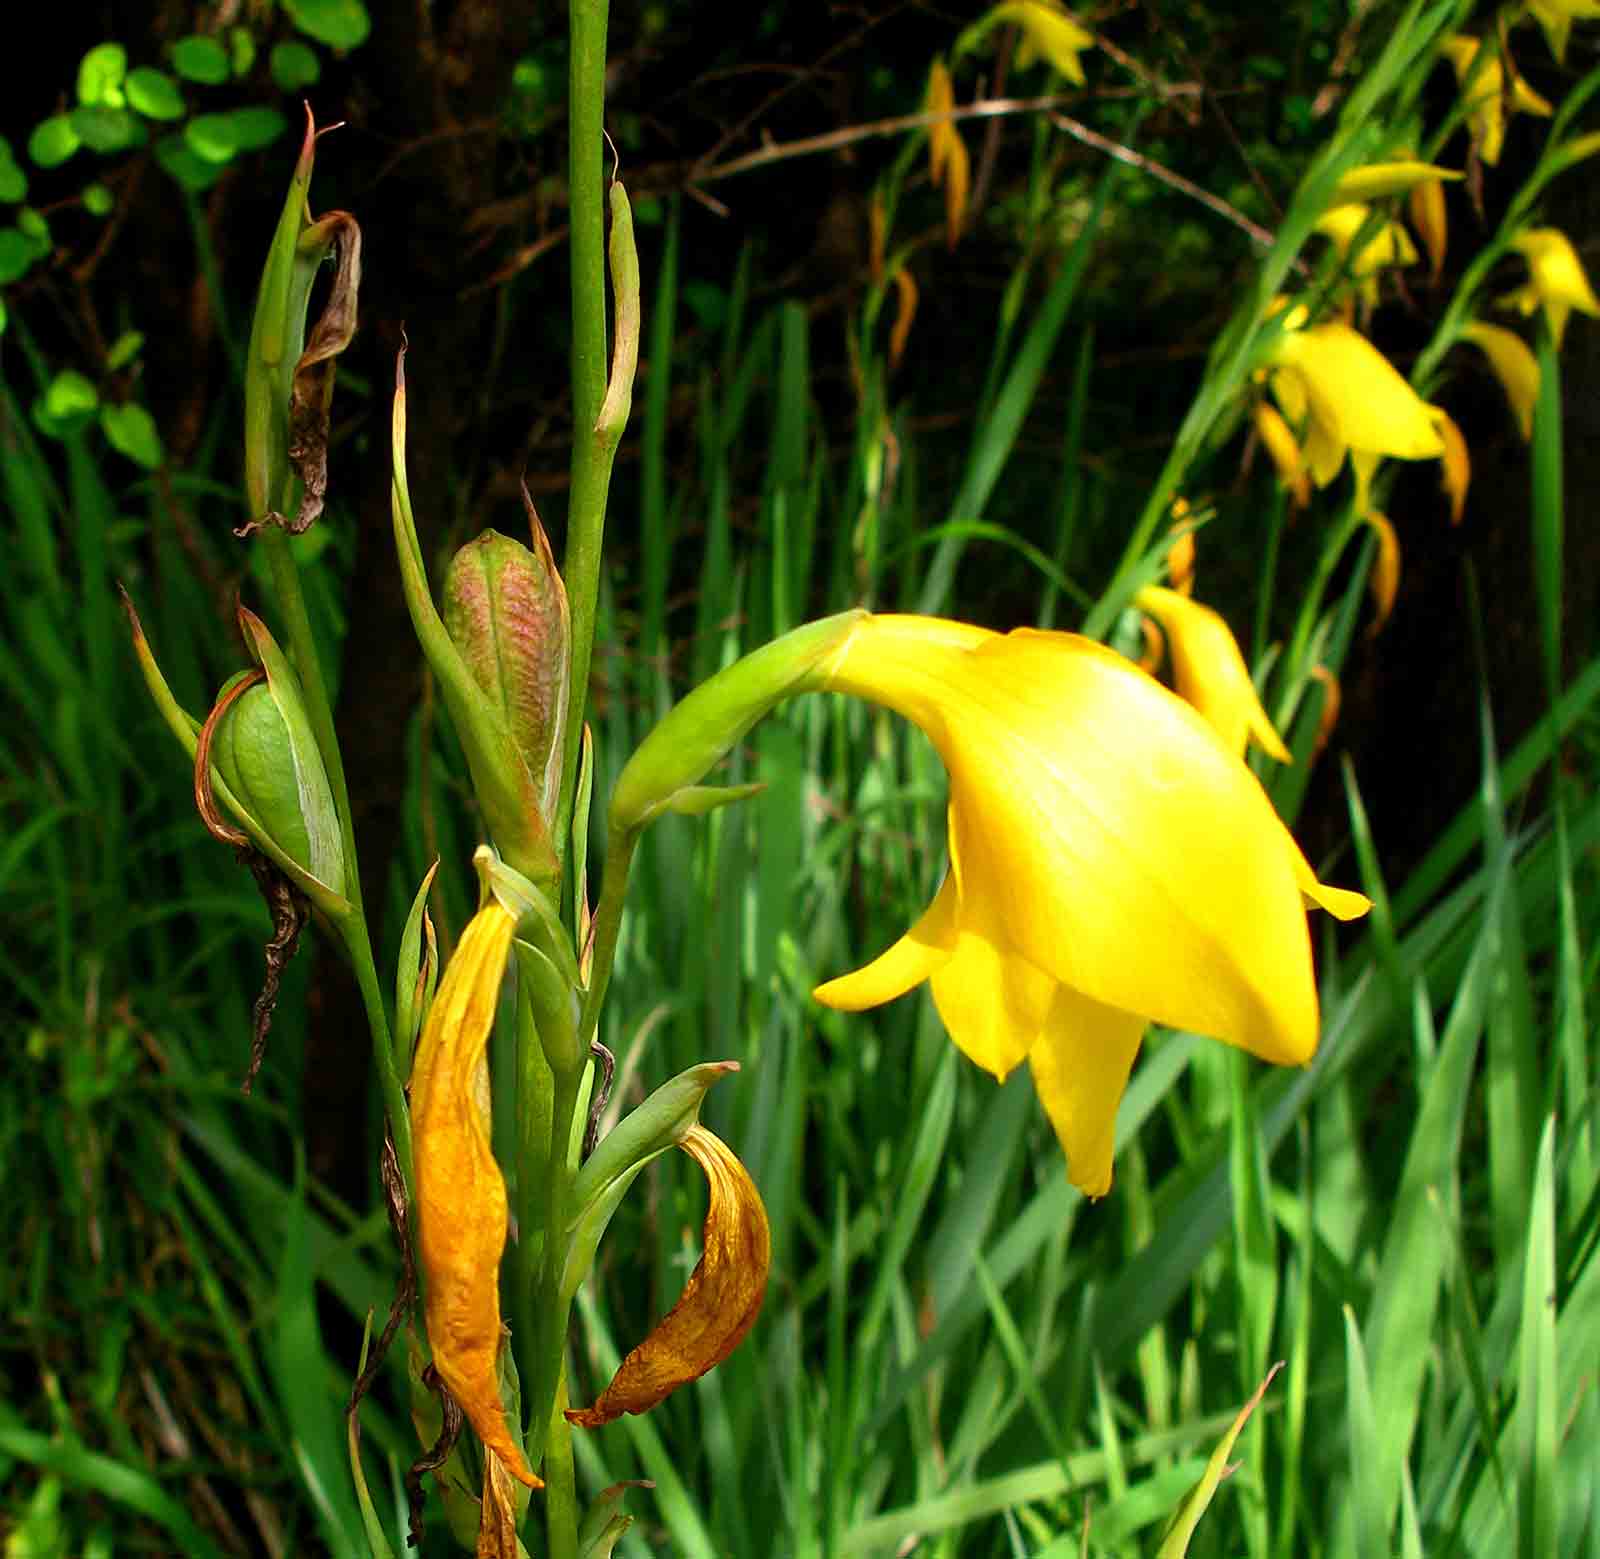 Gladiolus dalenii subsp. dalenii (yellow form)